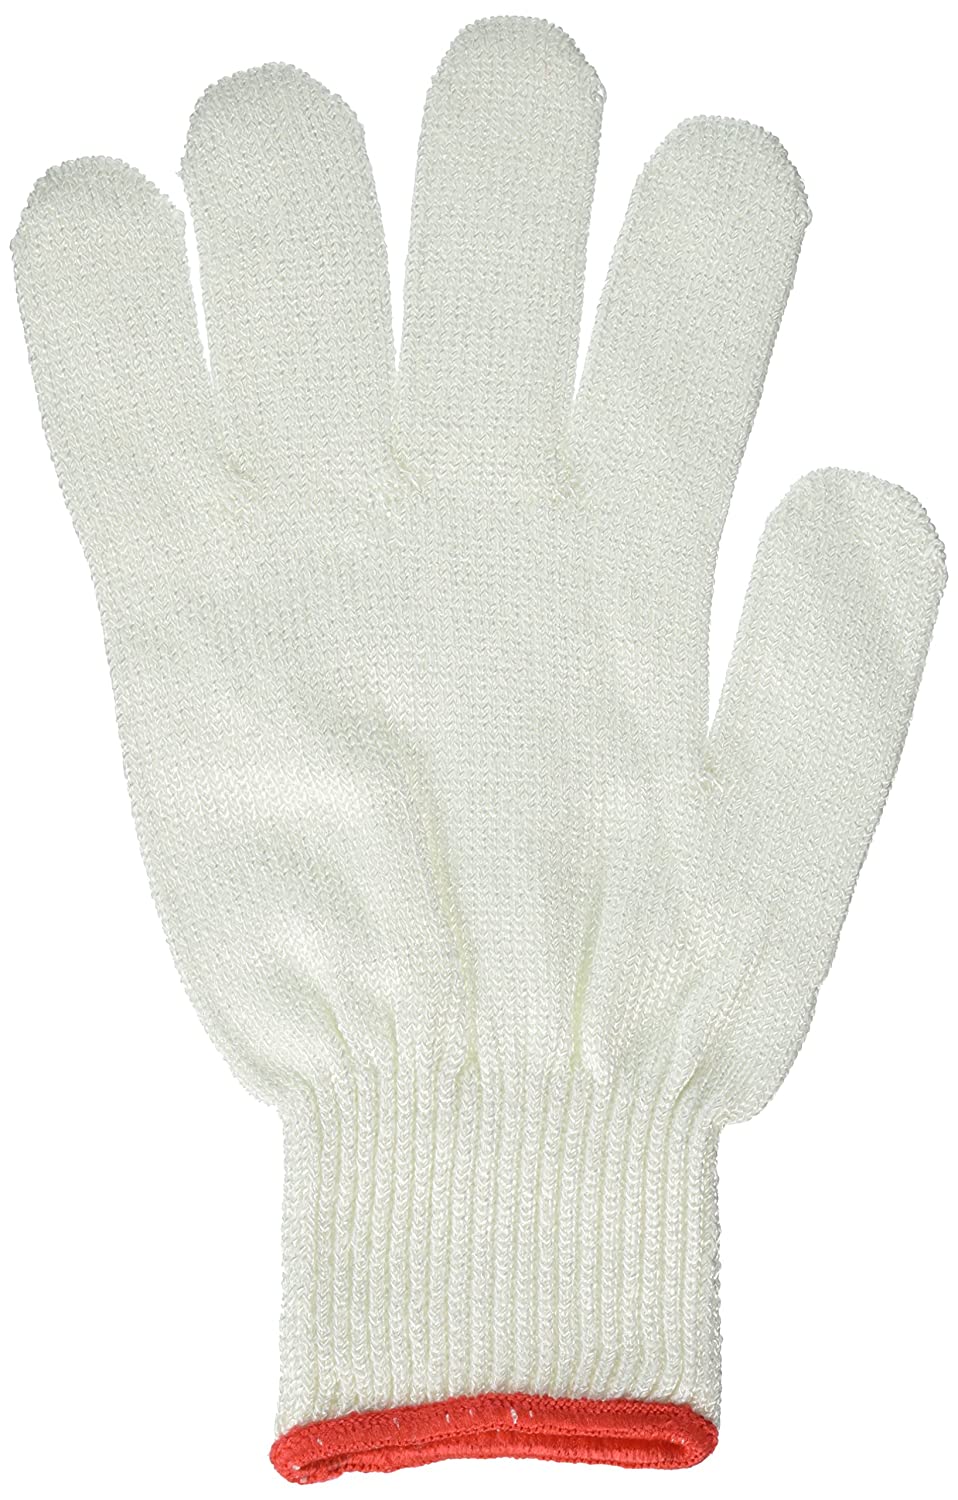 Update-International Cut Resistant Gloves